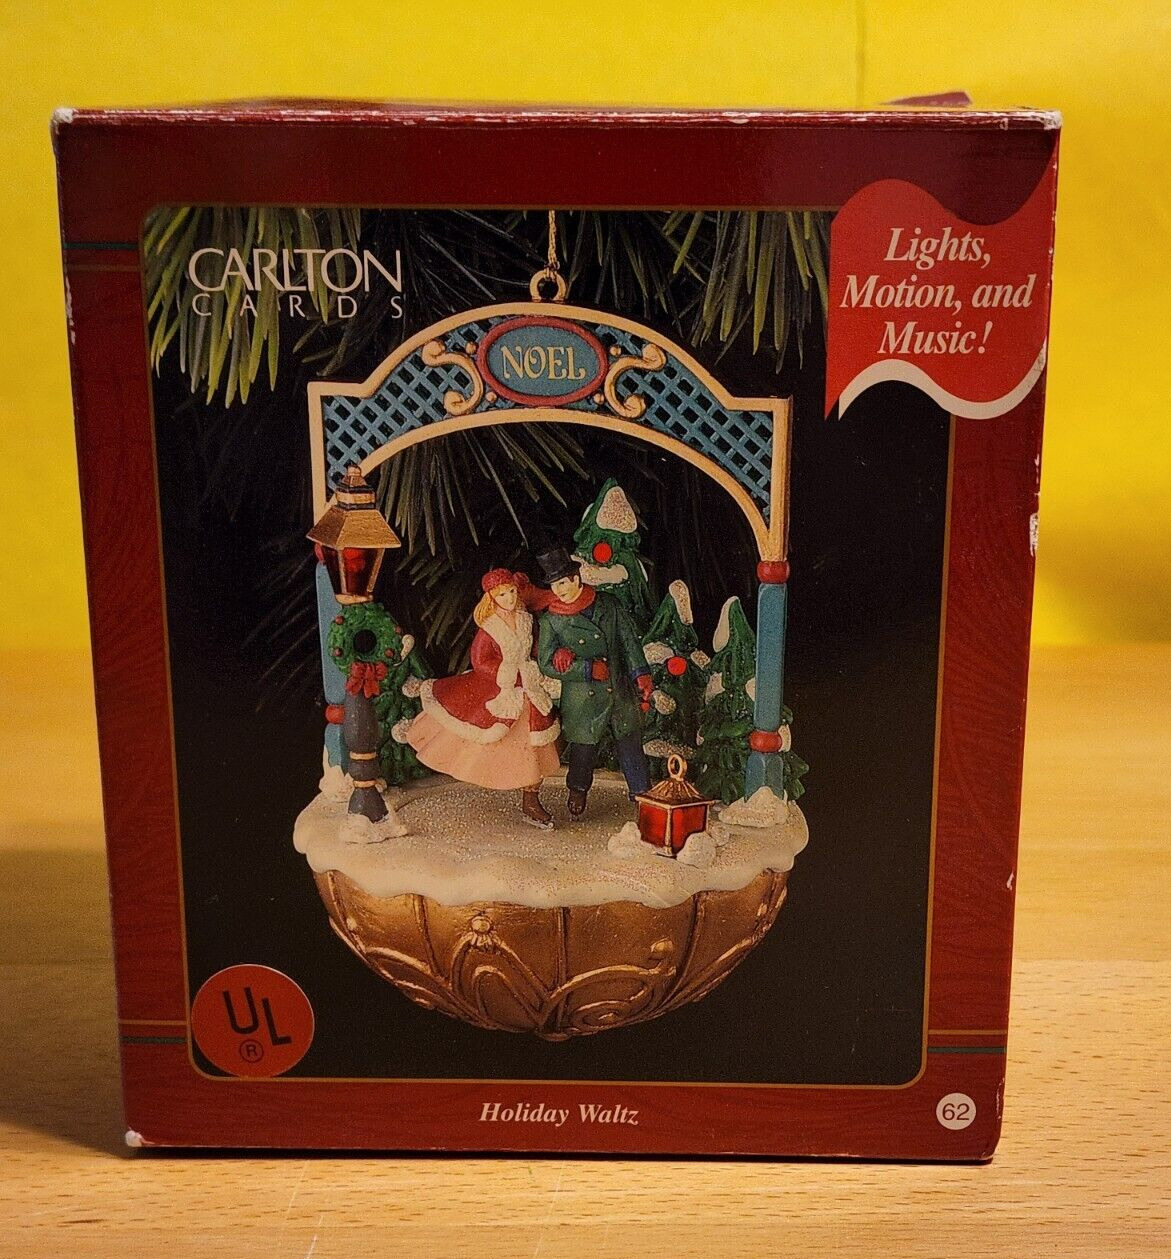 Carlton Cards Heirloom Ornament Lights Music “HOLIDAY WALTZ” EUC Tested